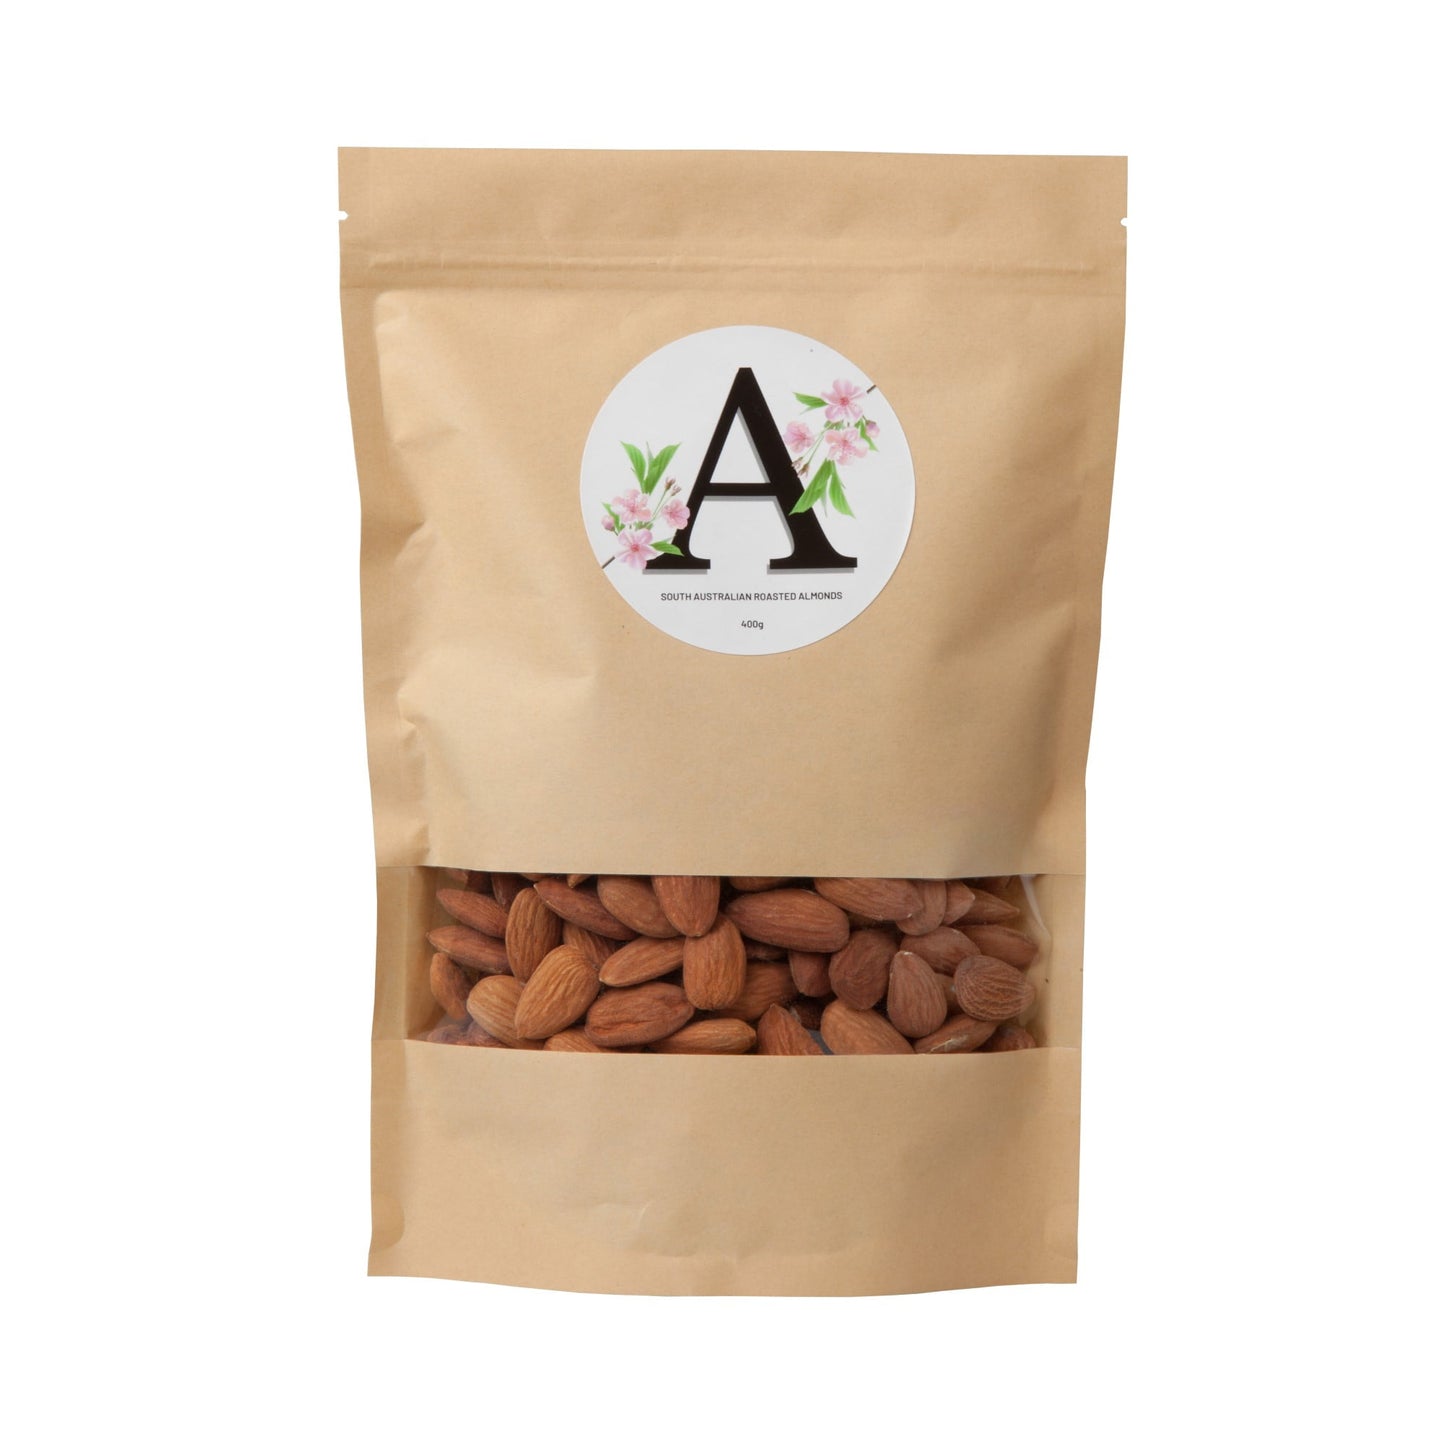 South Australian Dry Roasted Almonds | 400g